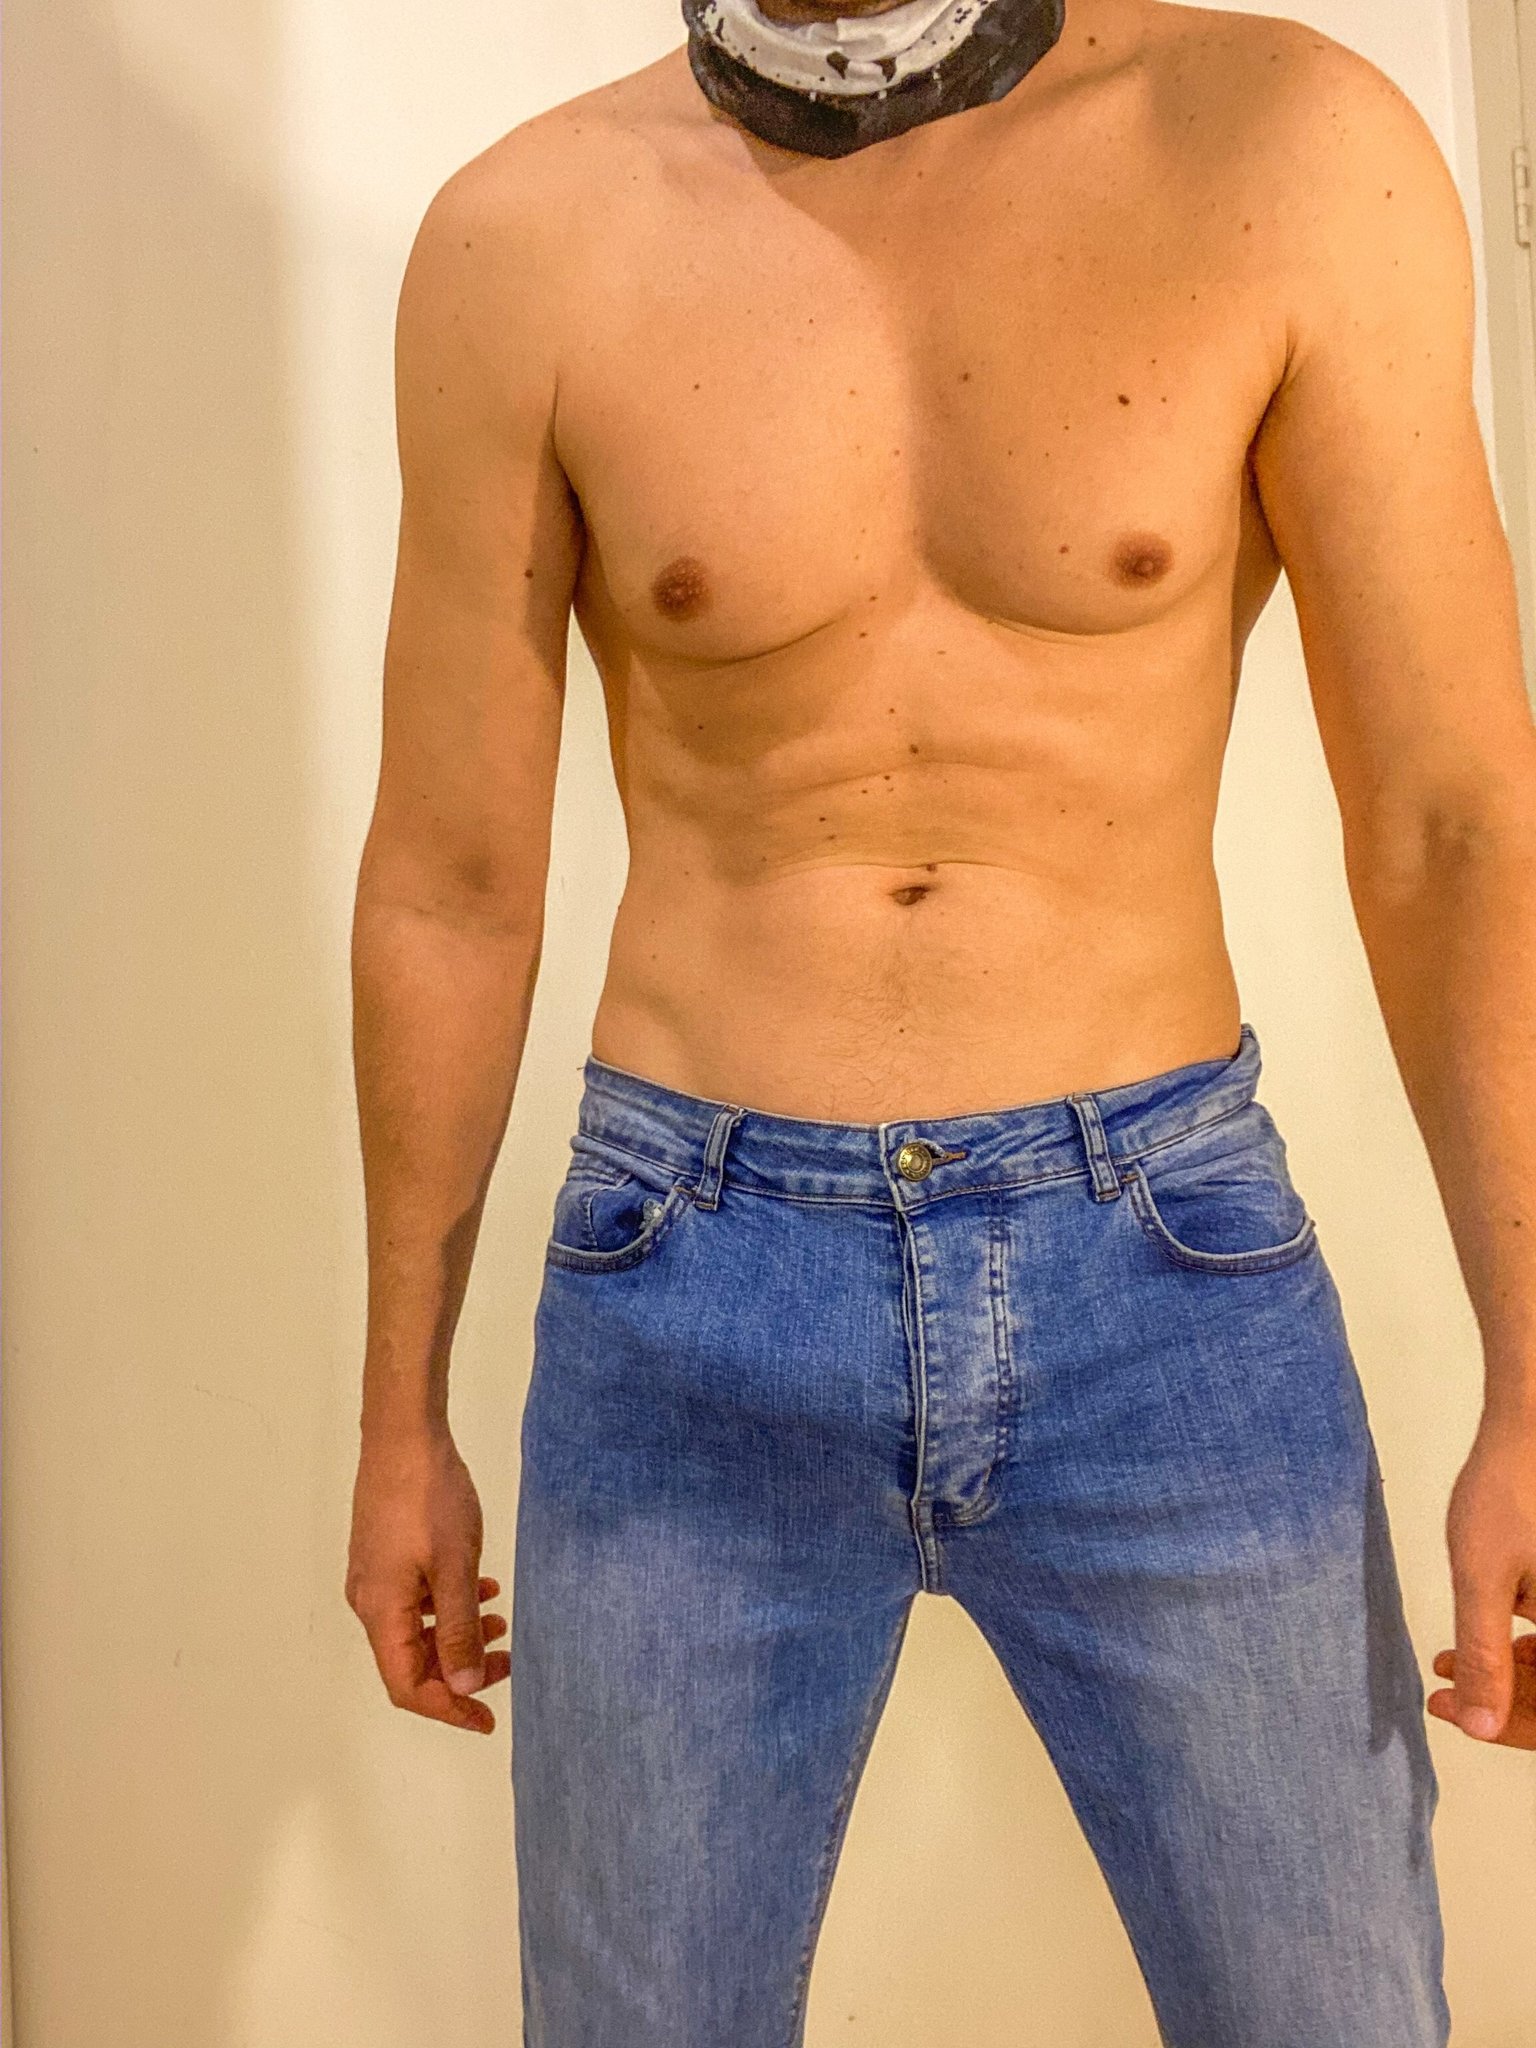 Master Tom on X: Jeans without underwear. Feel free 💪 #bulgepants  #bulgemen #bulgeoutline  / X